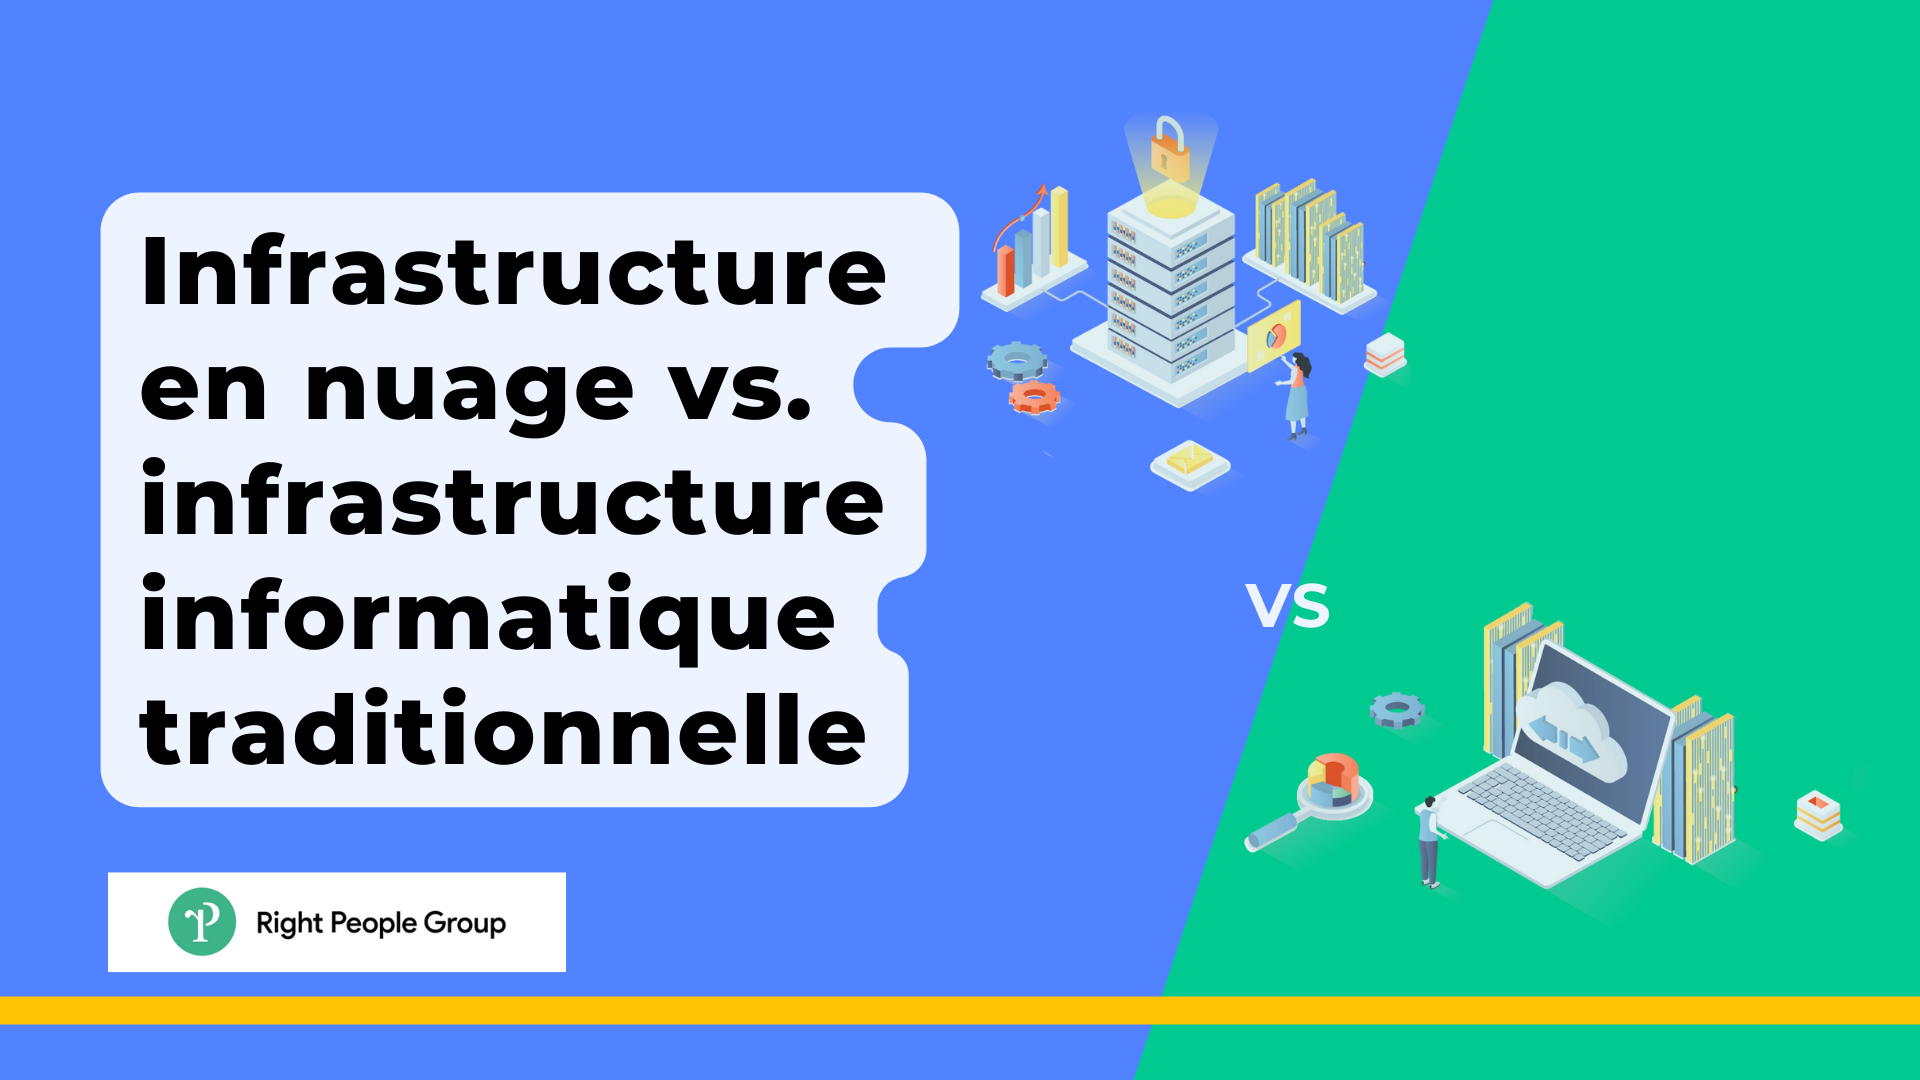 Infrastructure en nuage vs. infrastructure informatique traditionnelle